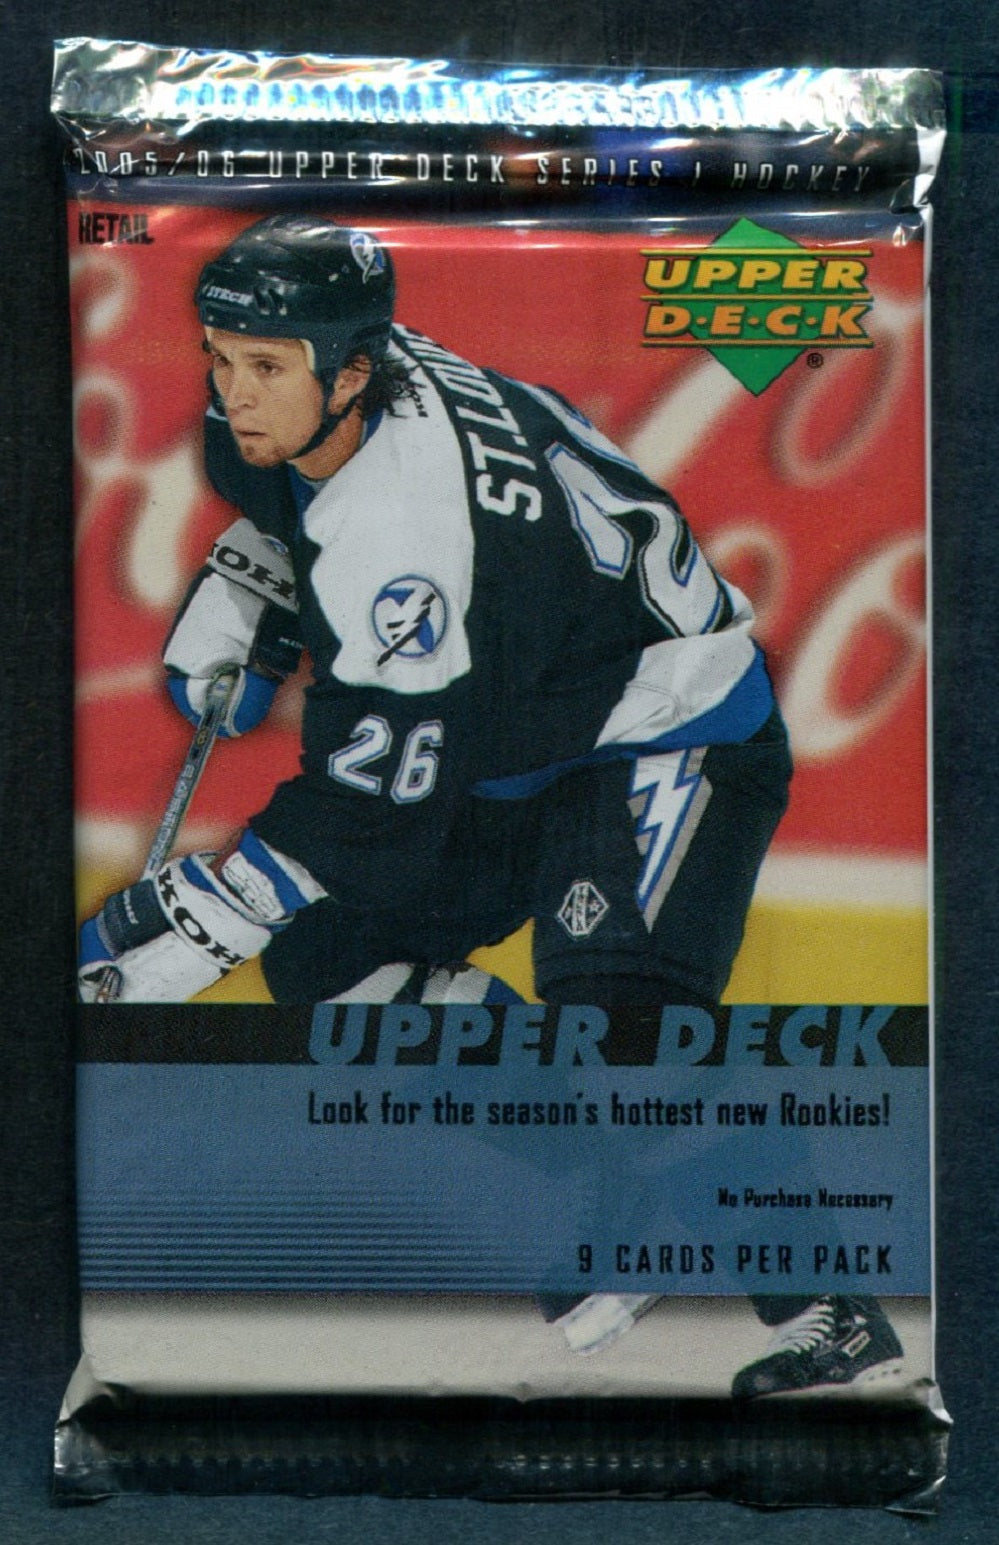 2005/06 Upper Deck Hockey Series 1 Unopened Pack (Retail)